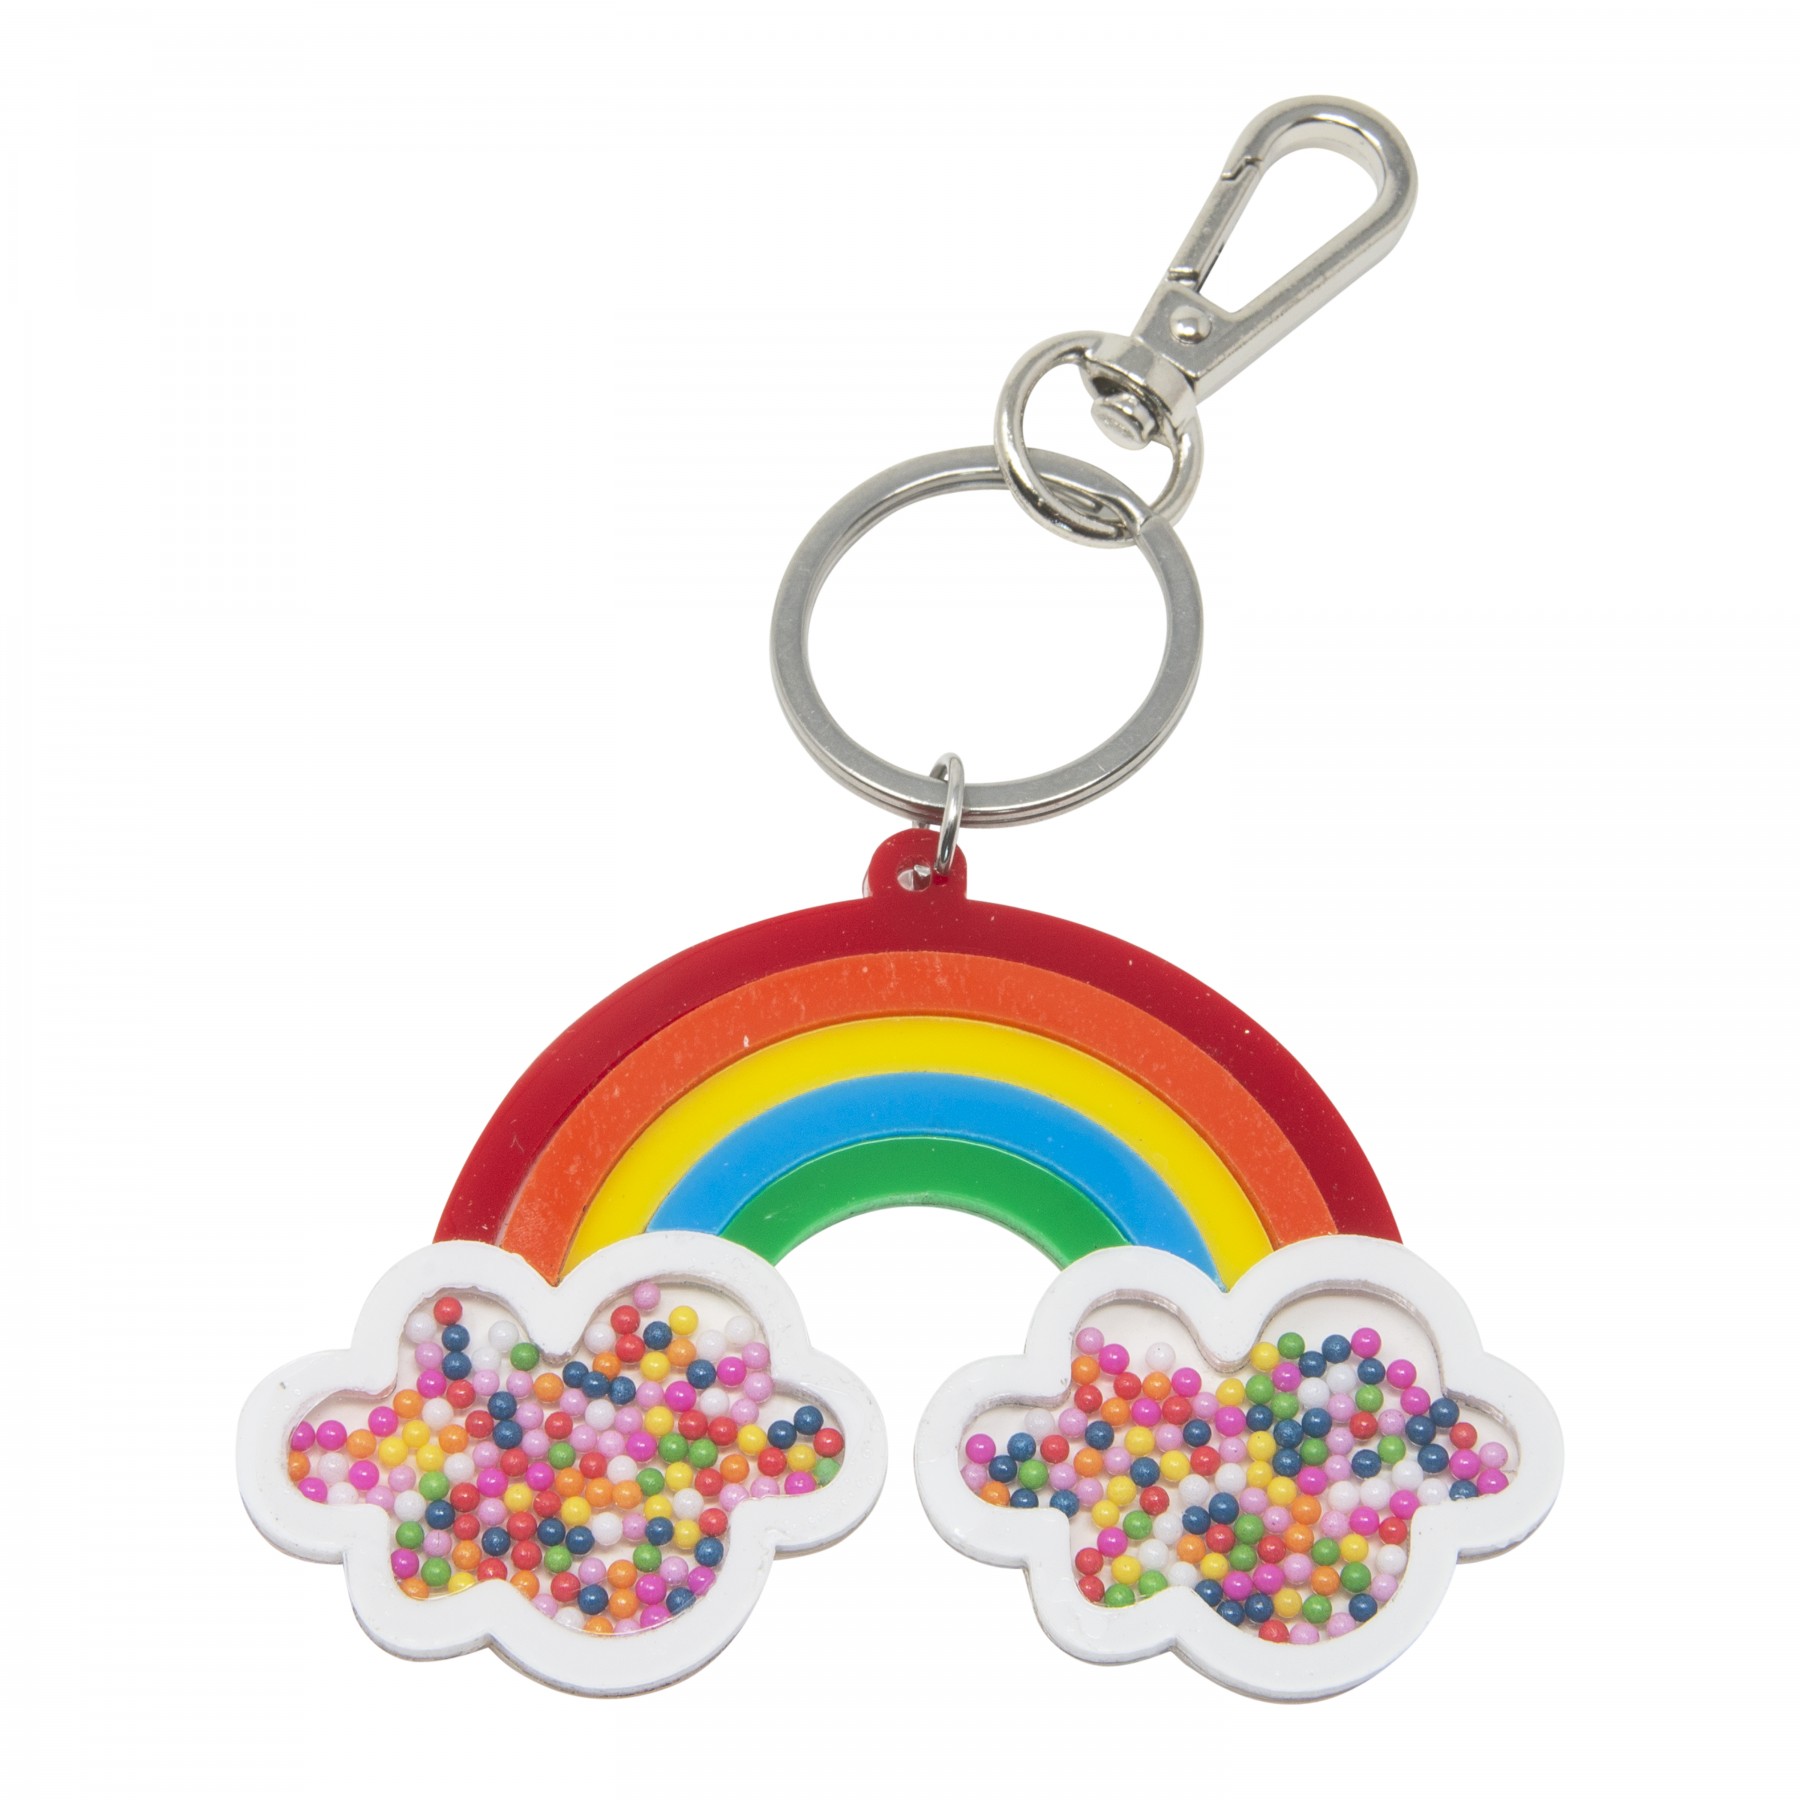 Rainbow keyring/ bag charm